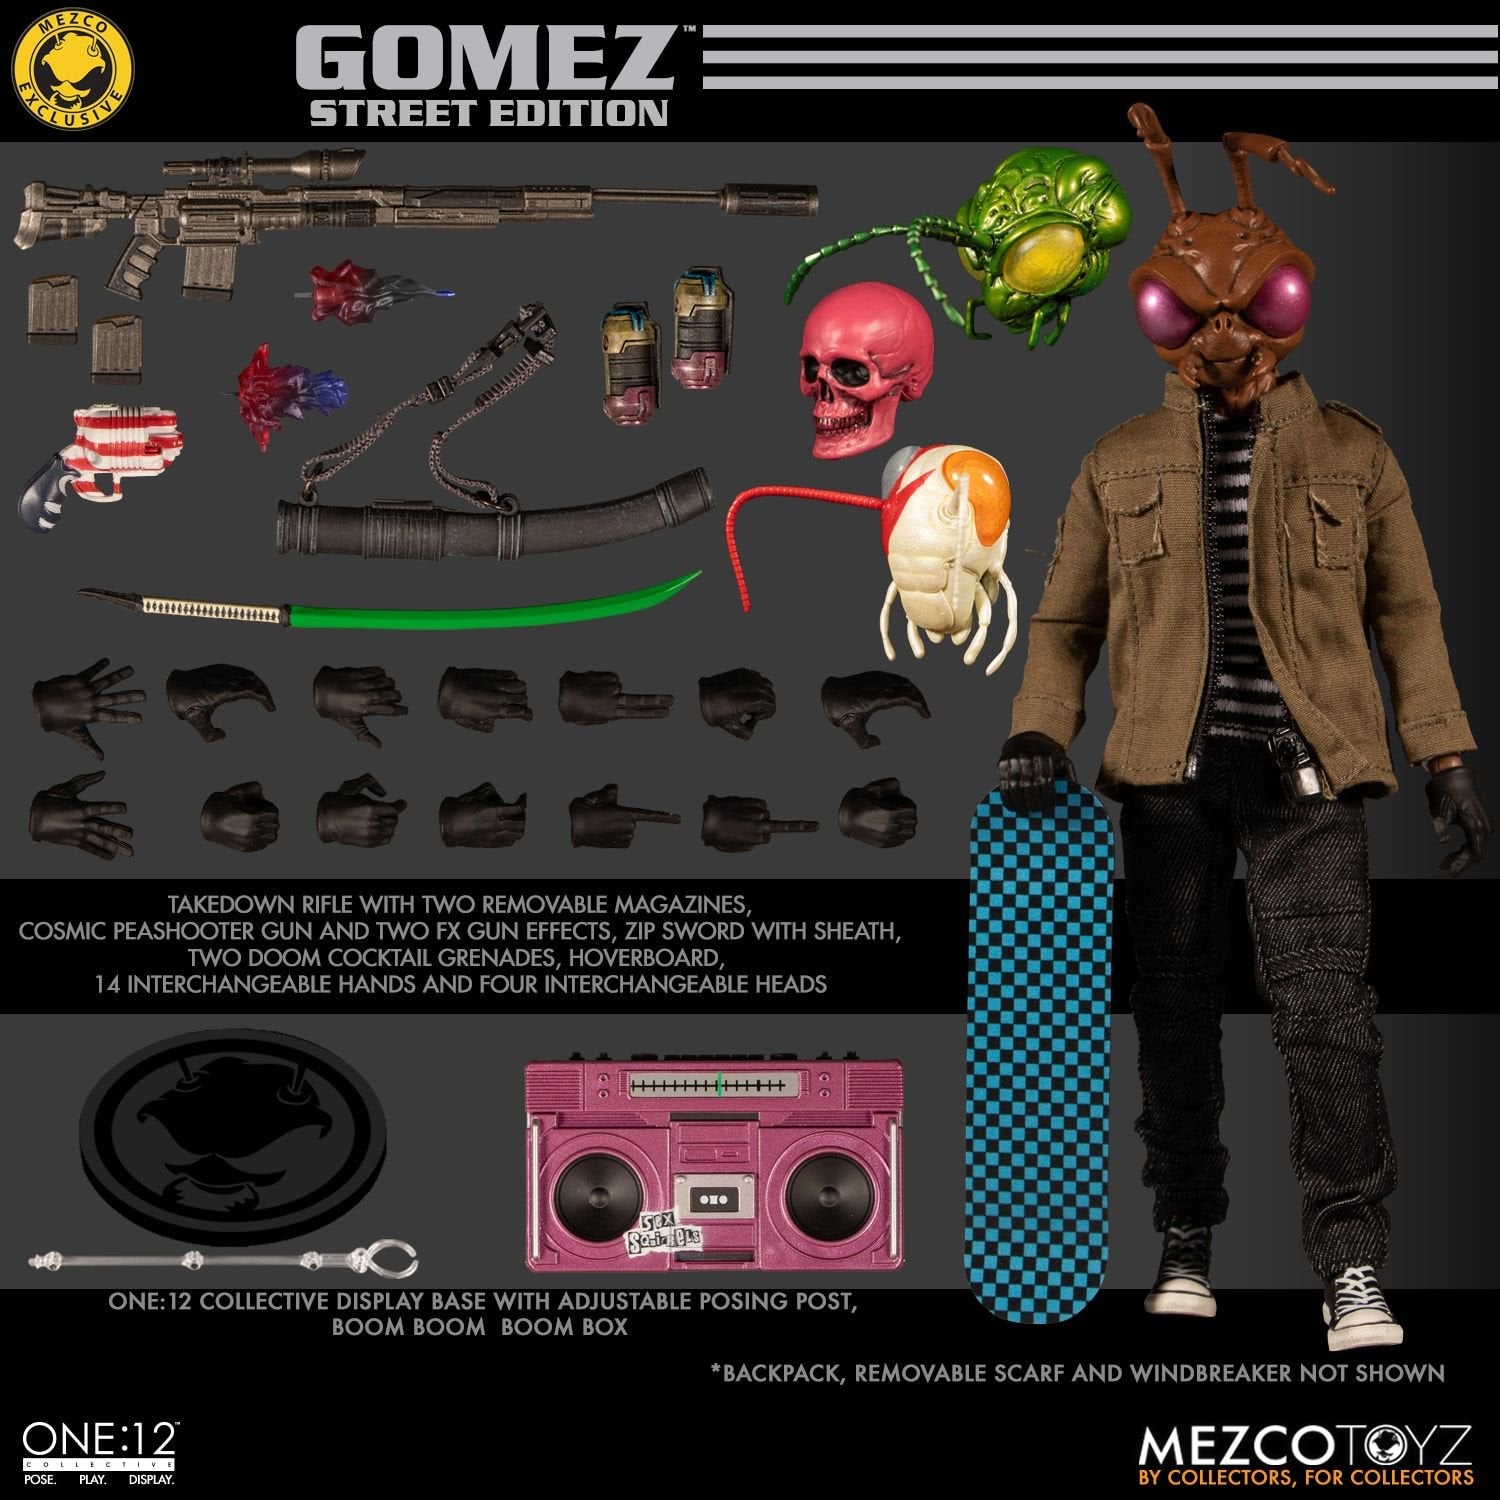 SDCC 2019 Mezco Toyz ONE:12 Gomez Street Edition Exclusive Action Figure